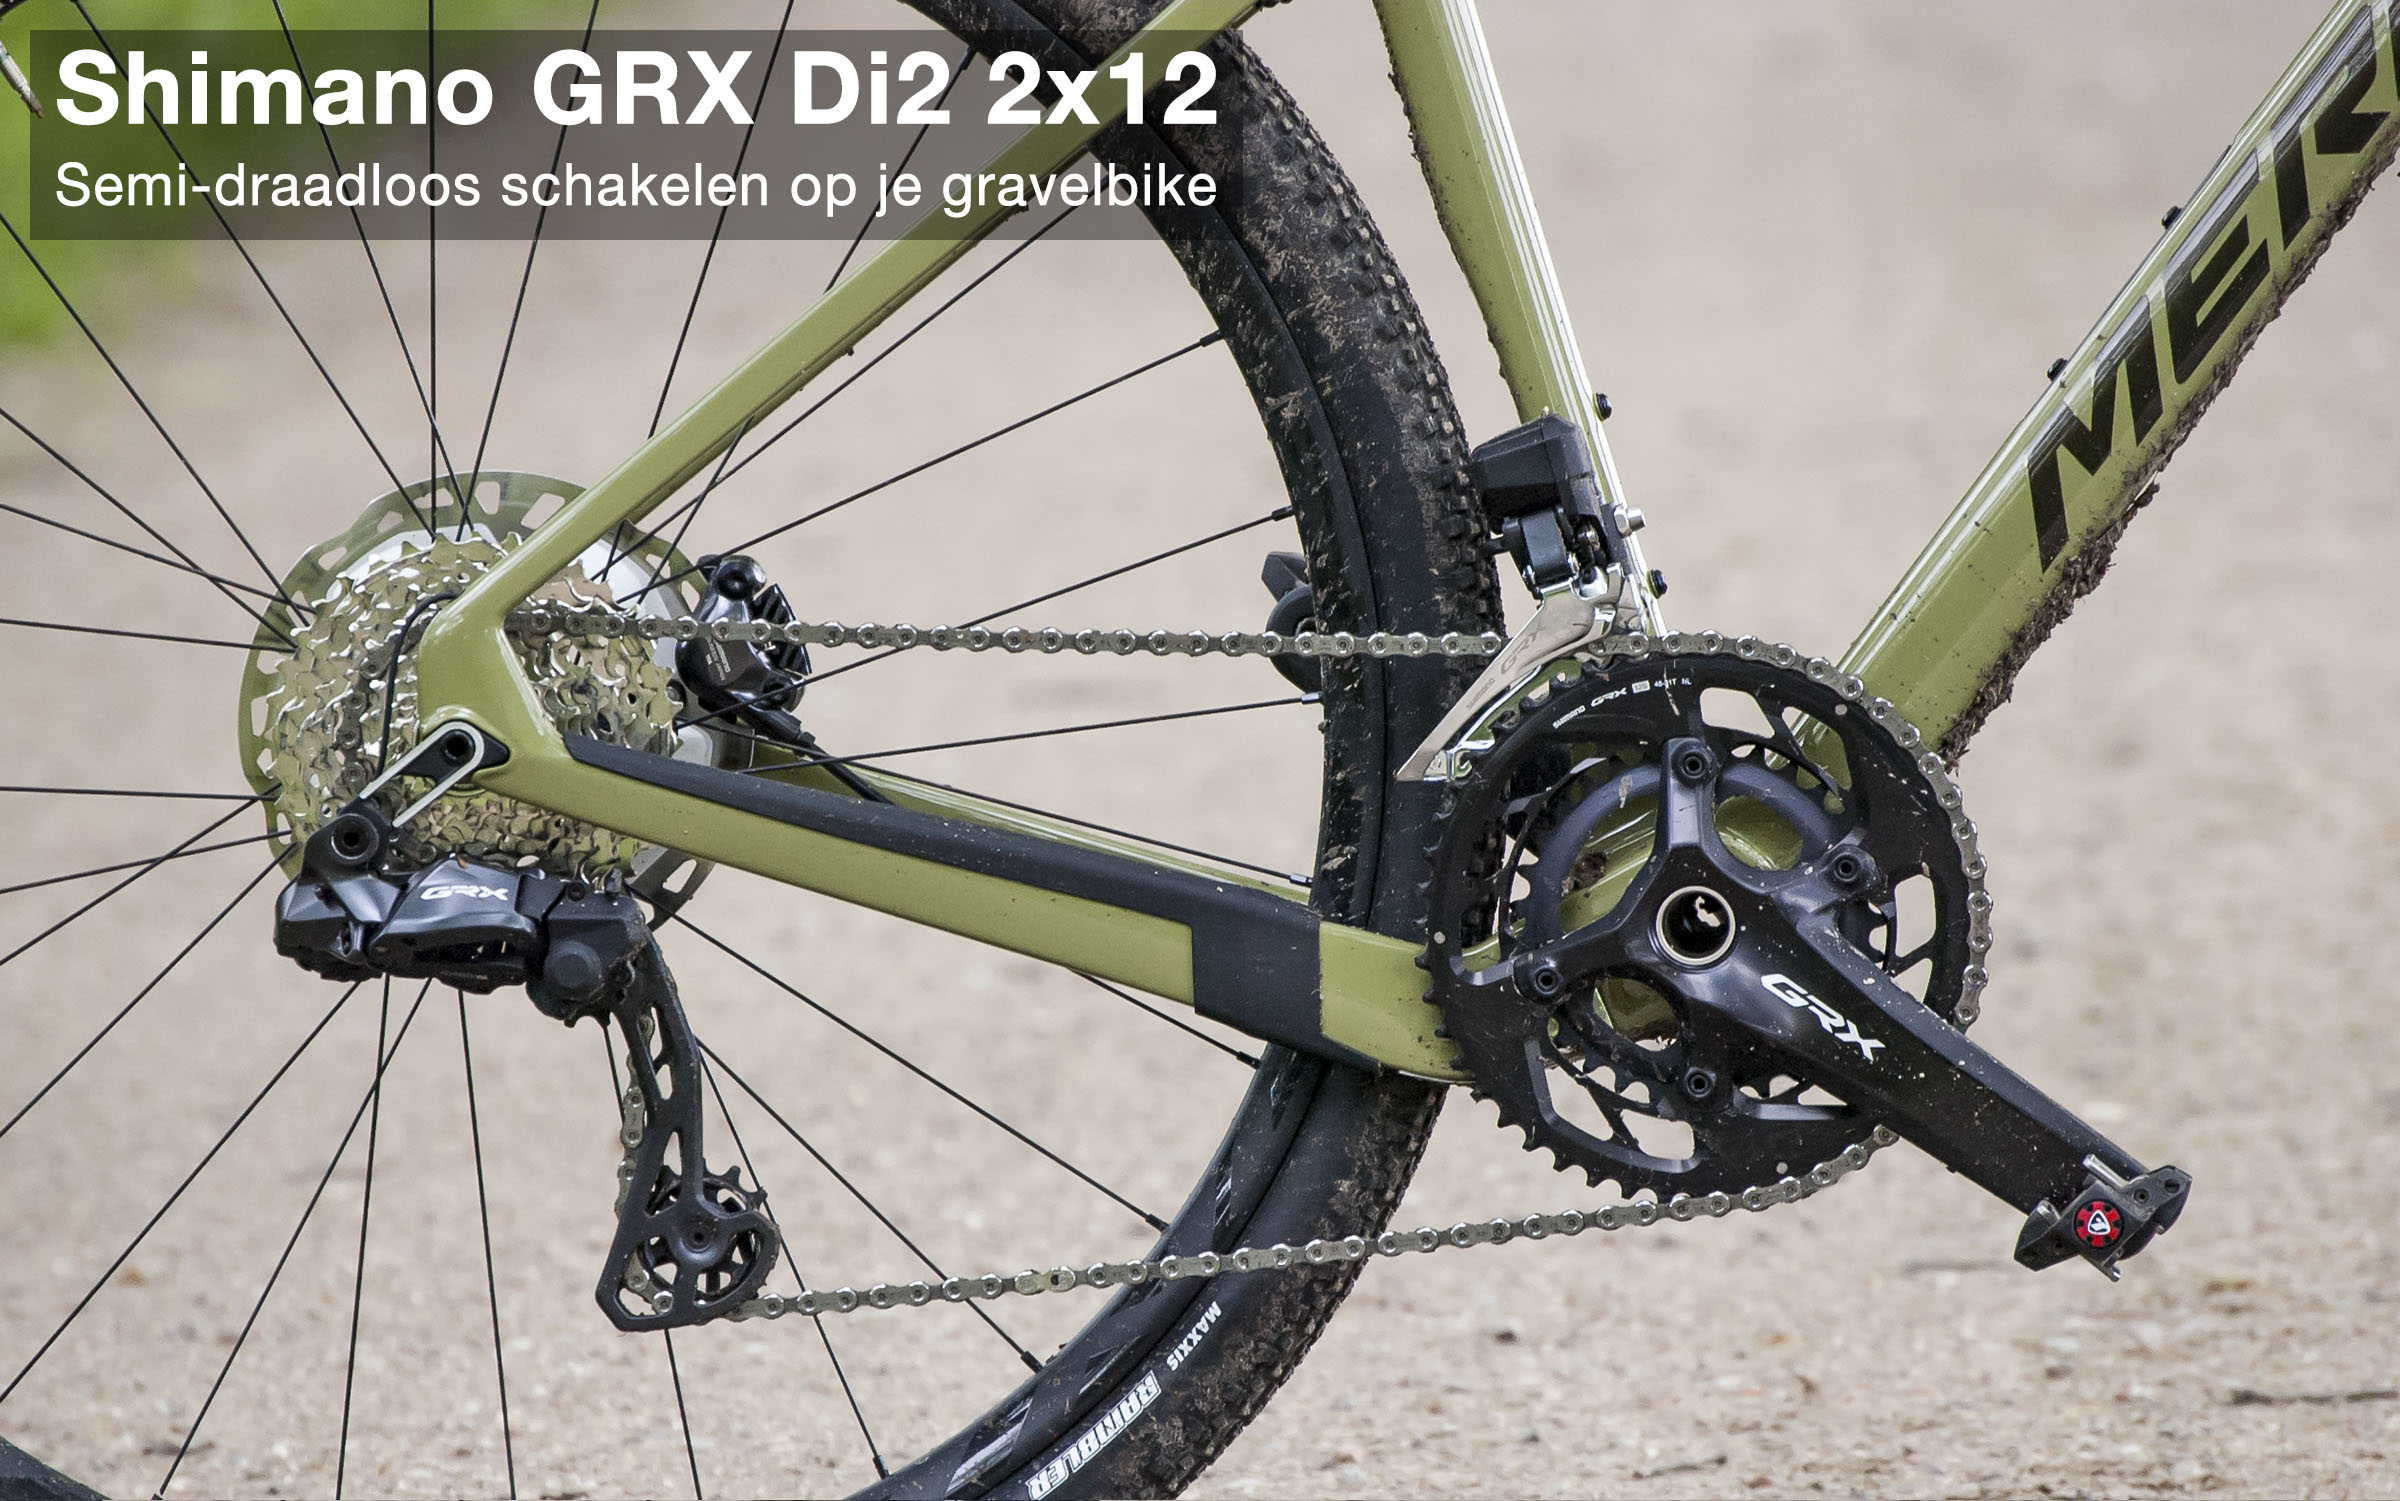 Shimano GRX Di2 2x12 12-speed semi-draadloos RX825 gravel groep Merida Silex 8000